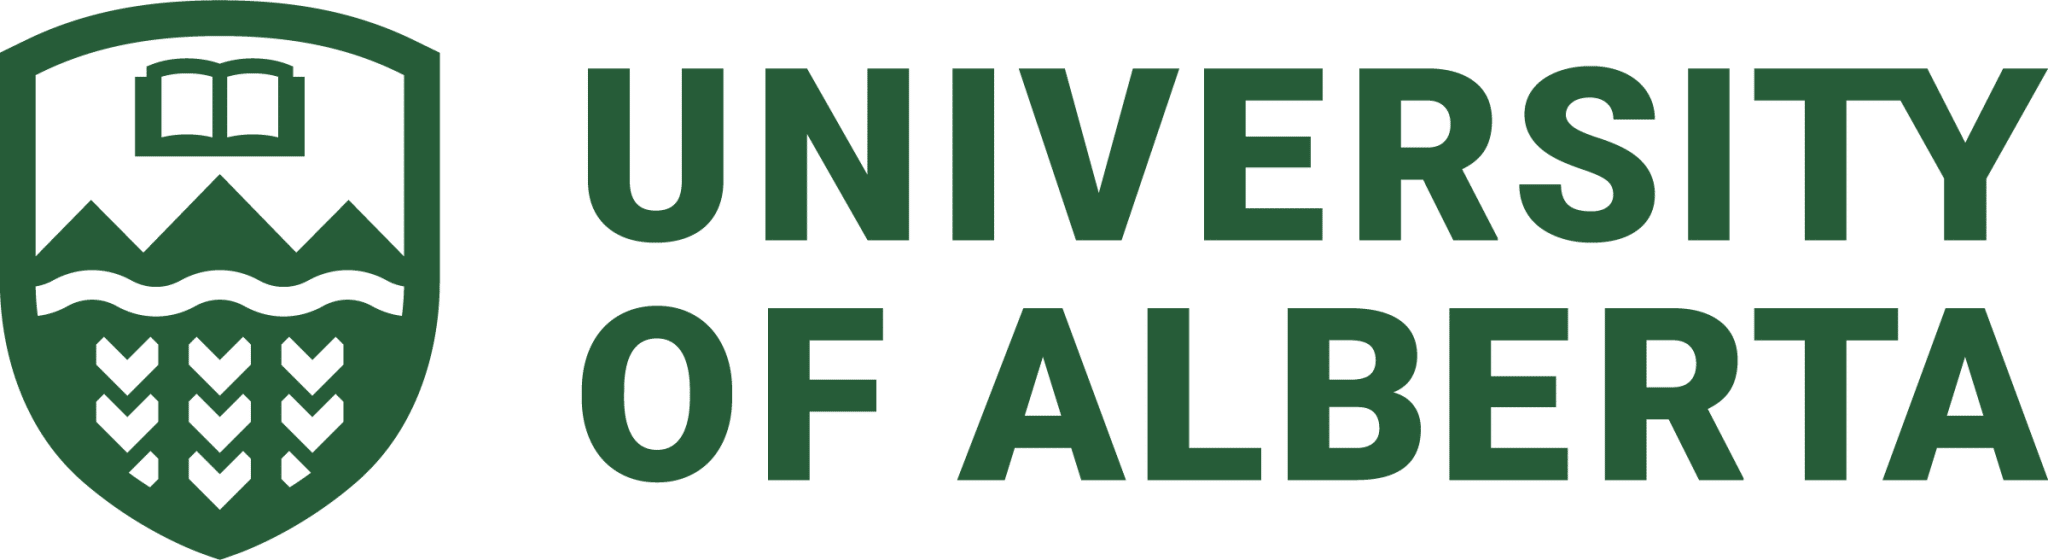 The nanofab university of alberta logo on a green background.